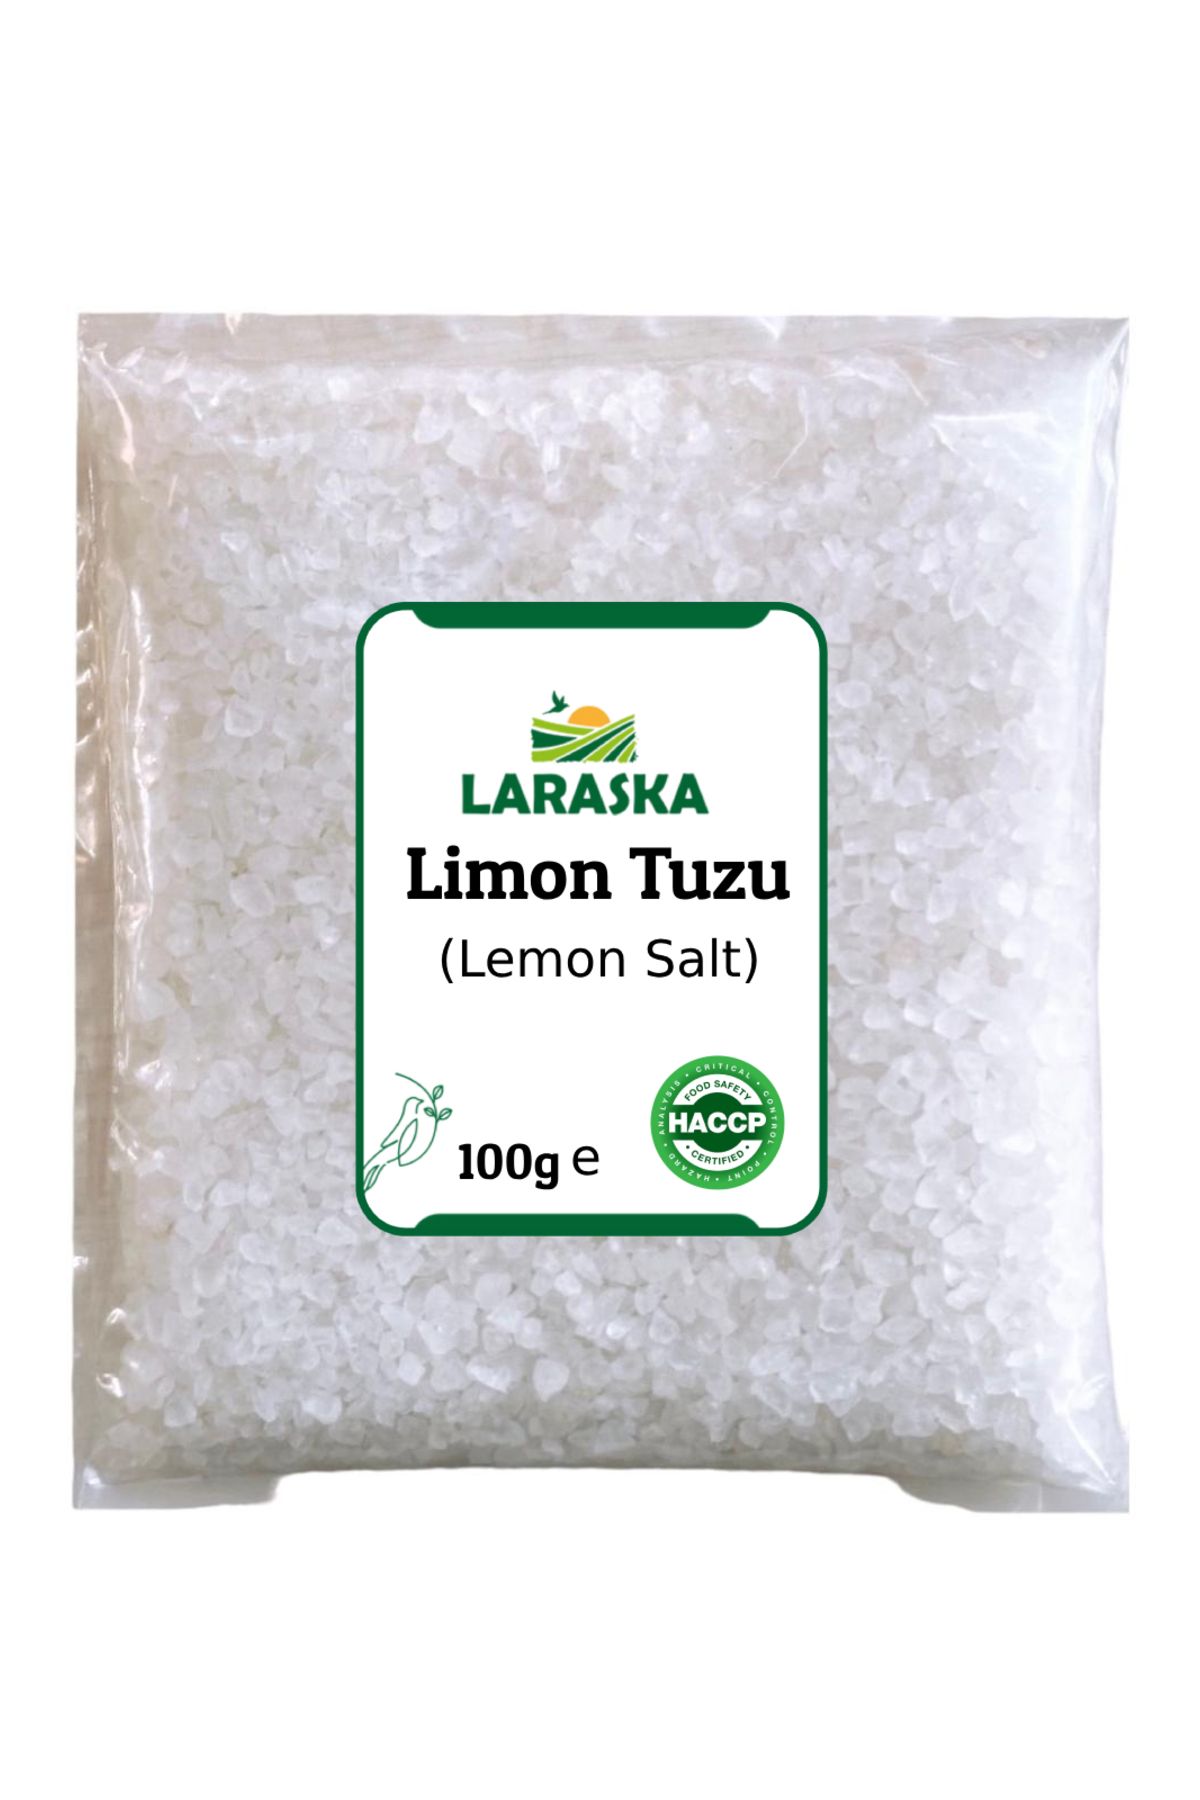 Laraska Limon Tuzu 100g - Lemon Salt 100g